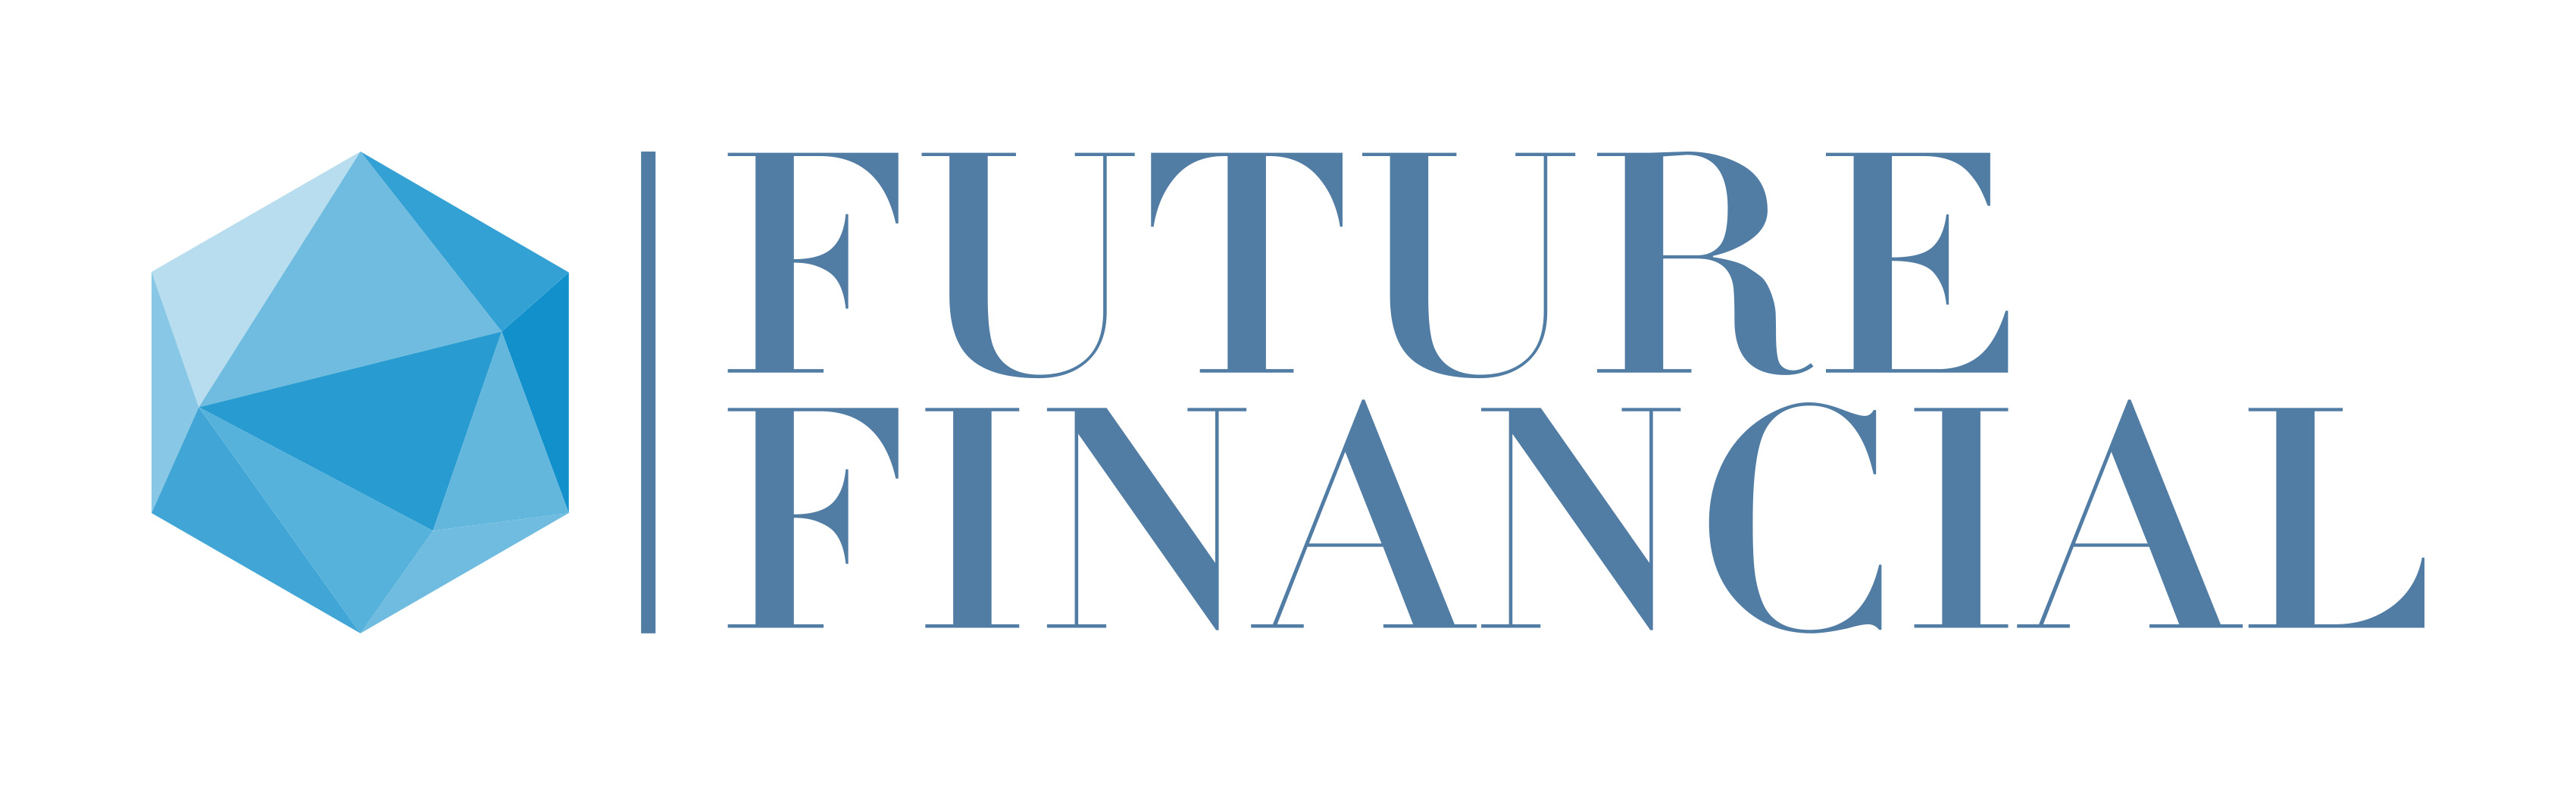 Future Finance Logo